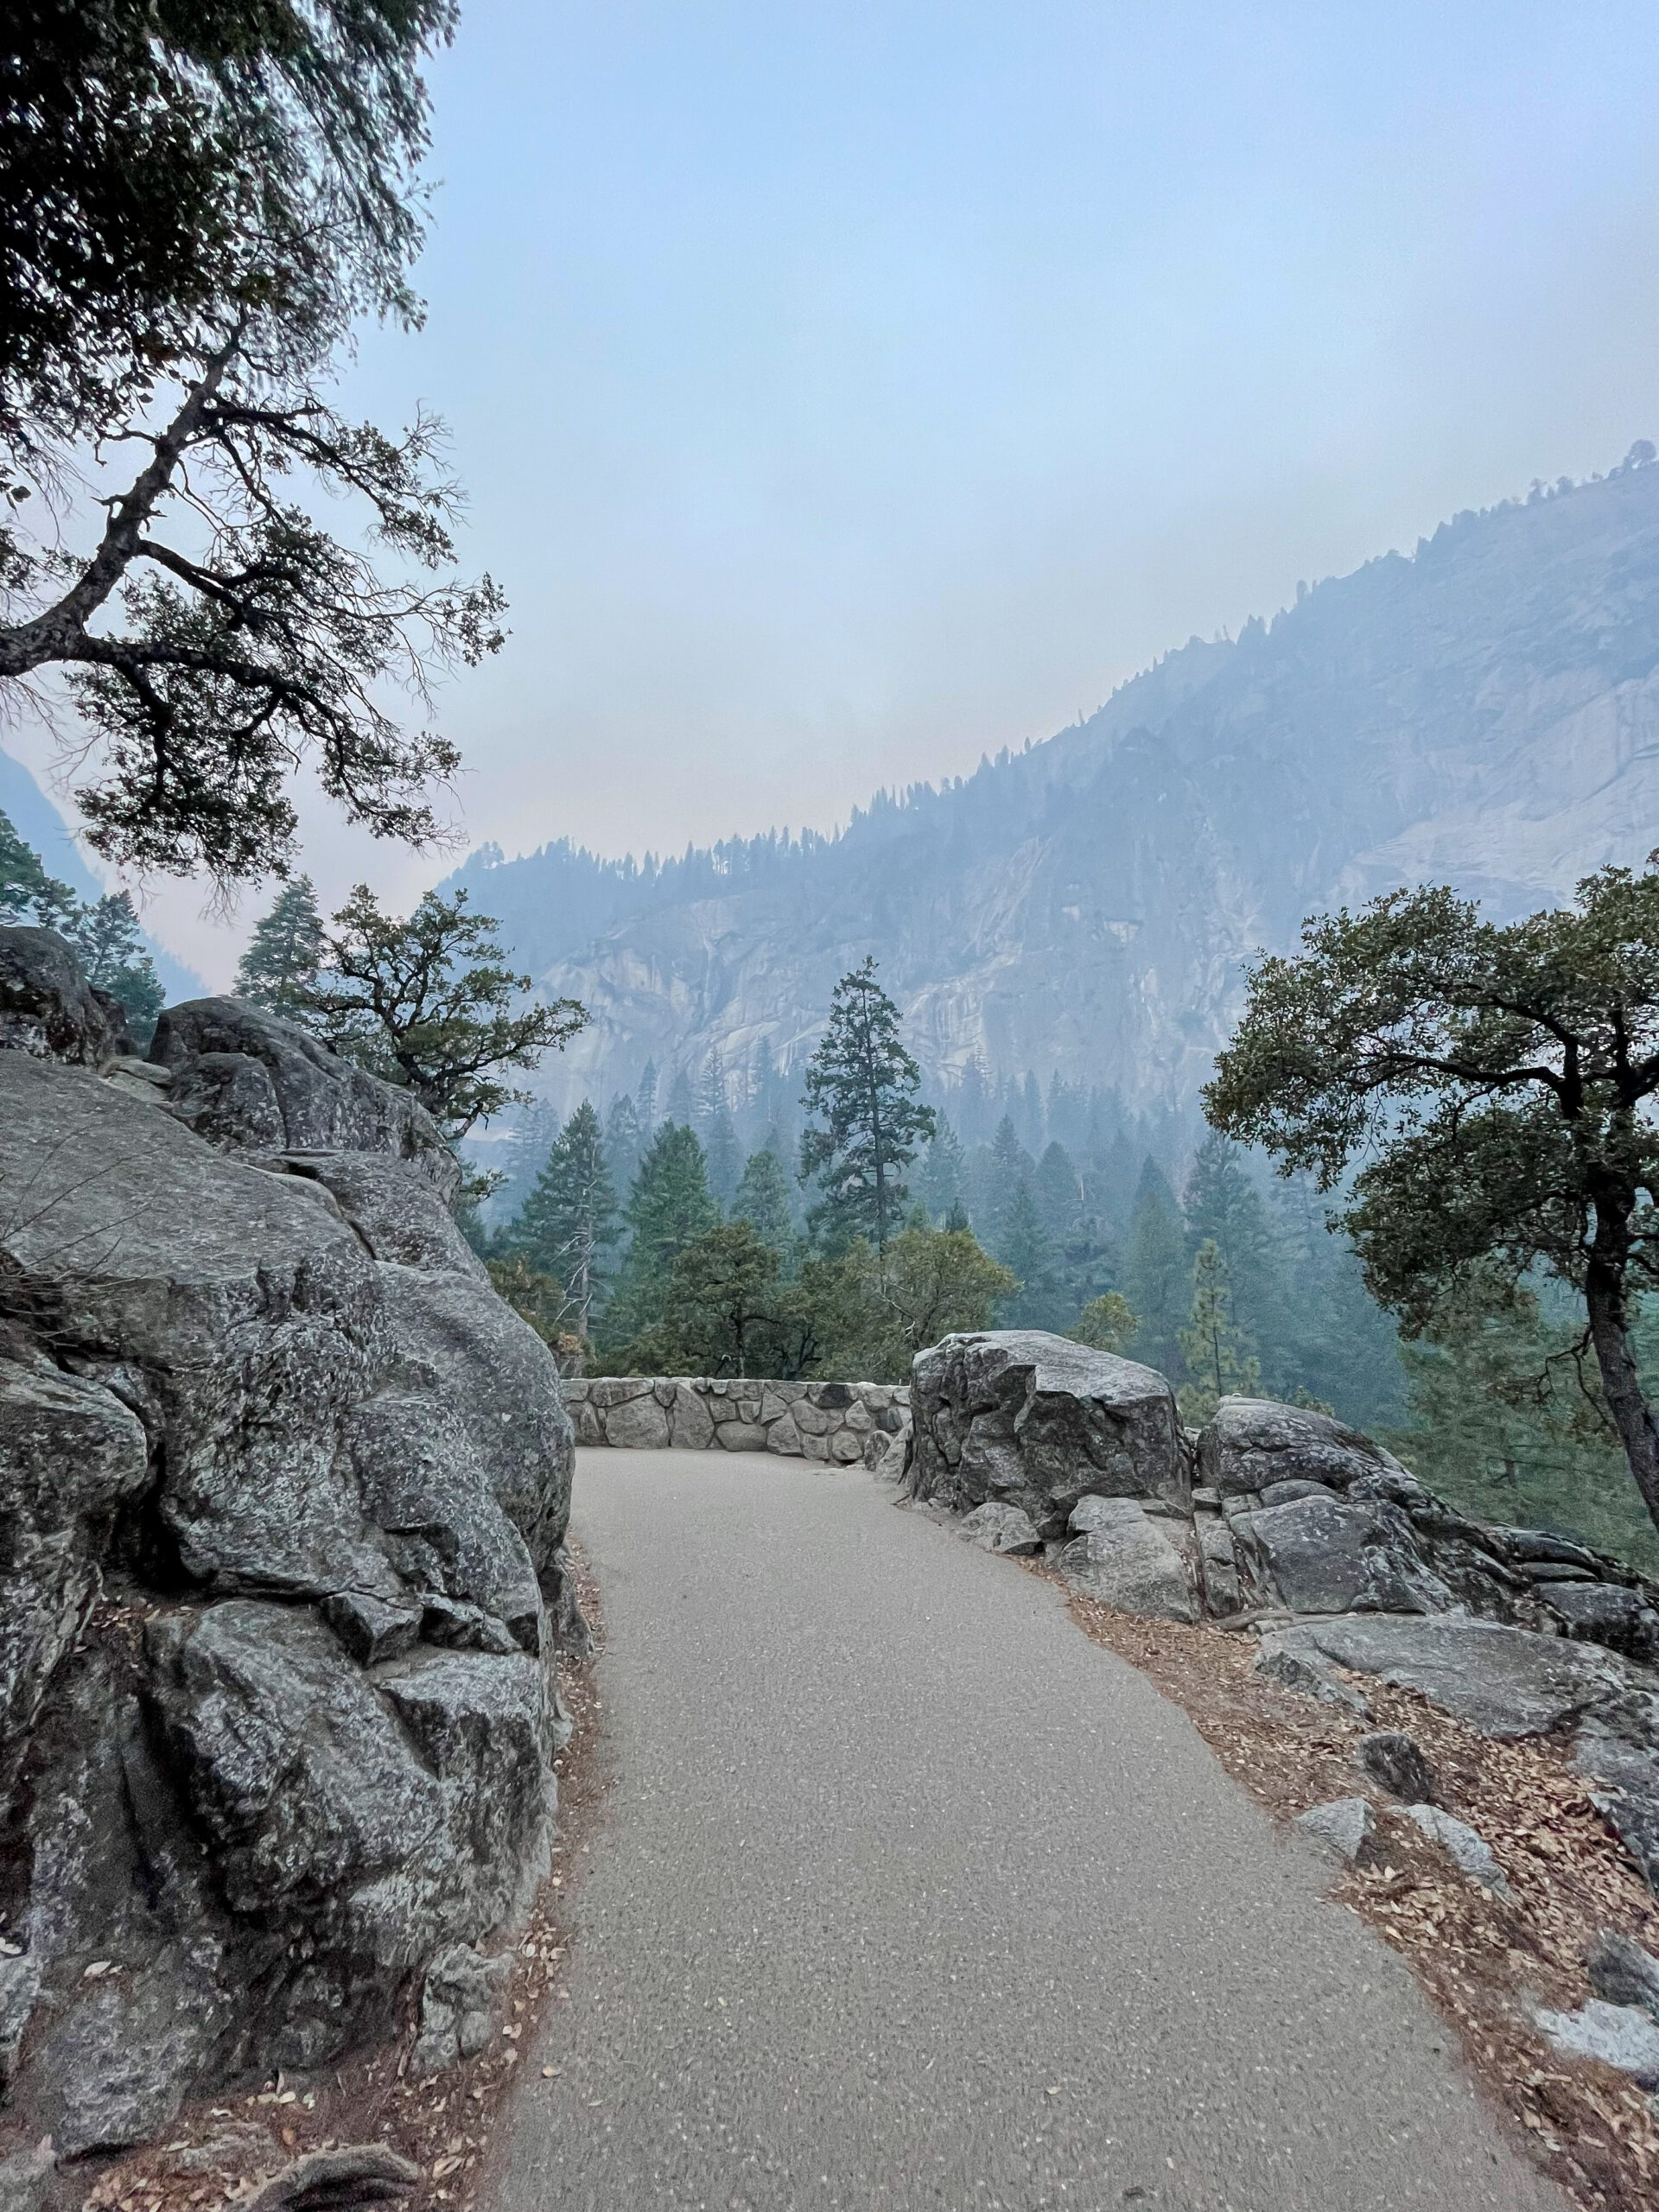 Mist Trail in Yosemite